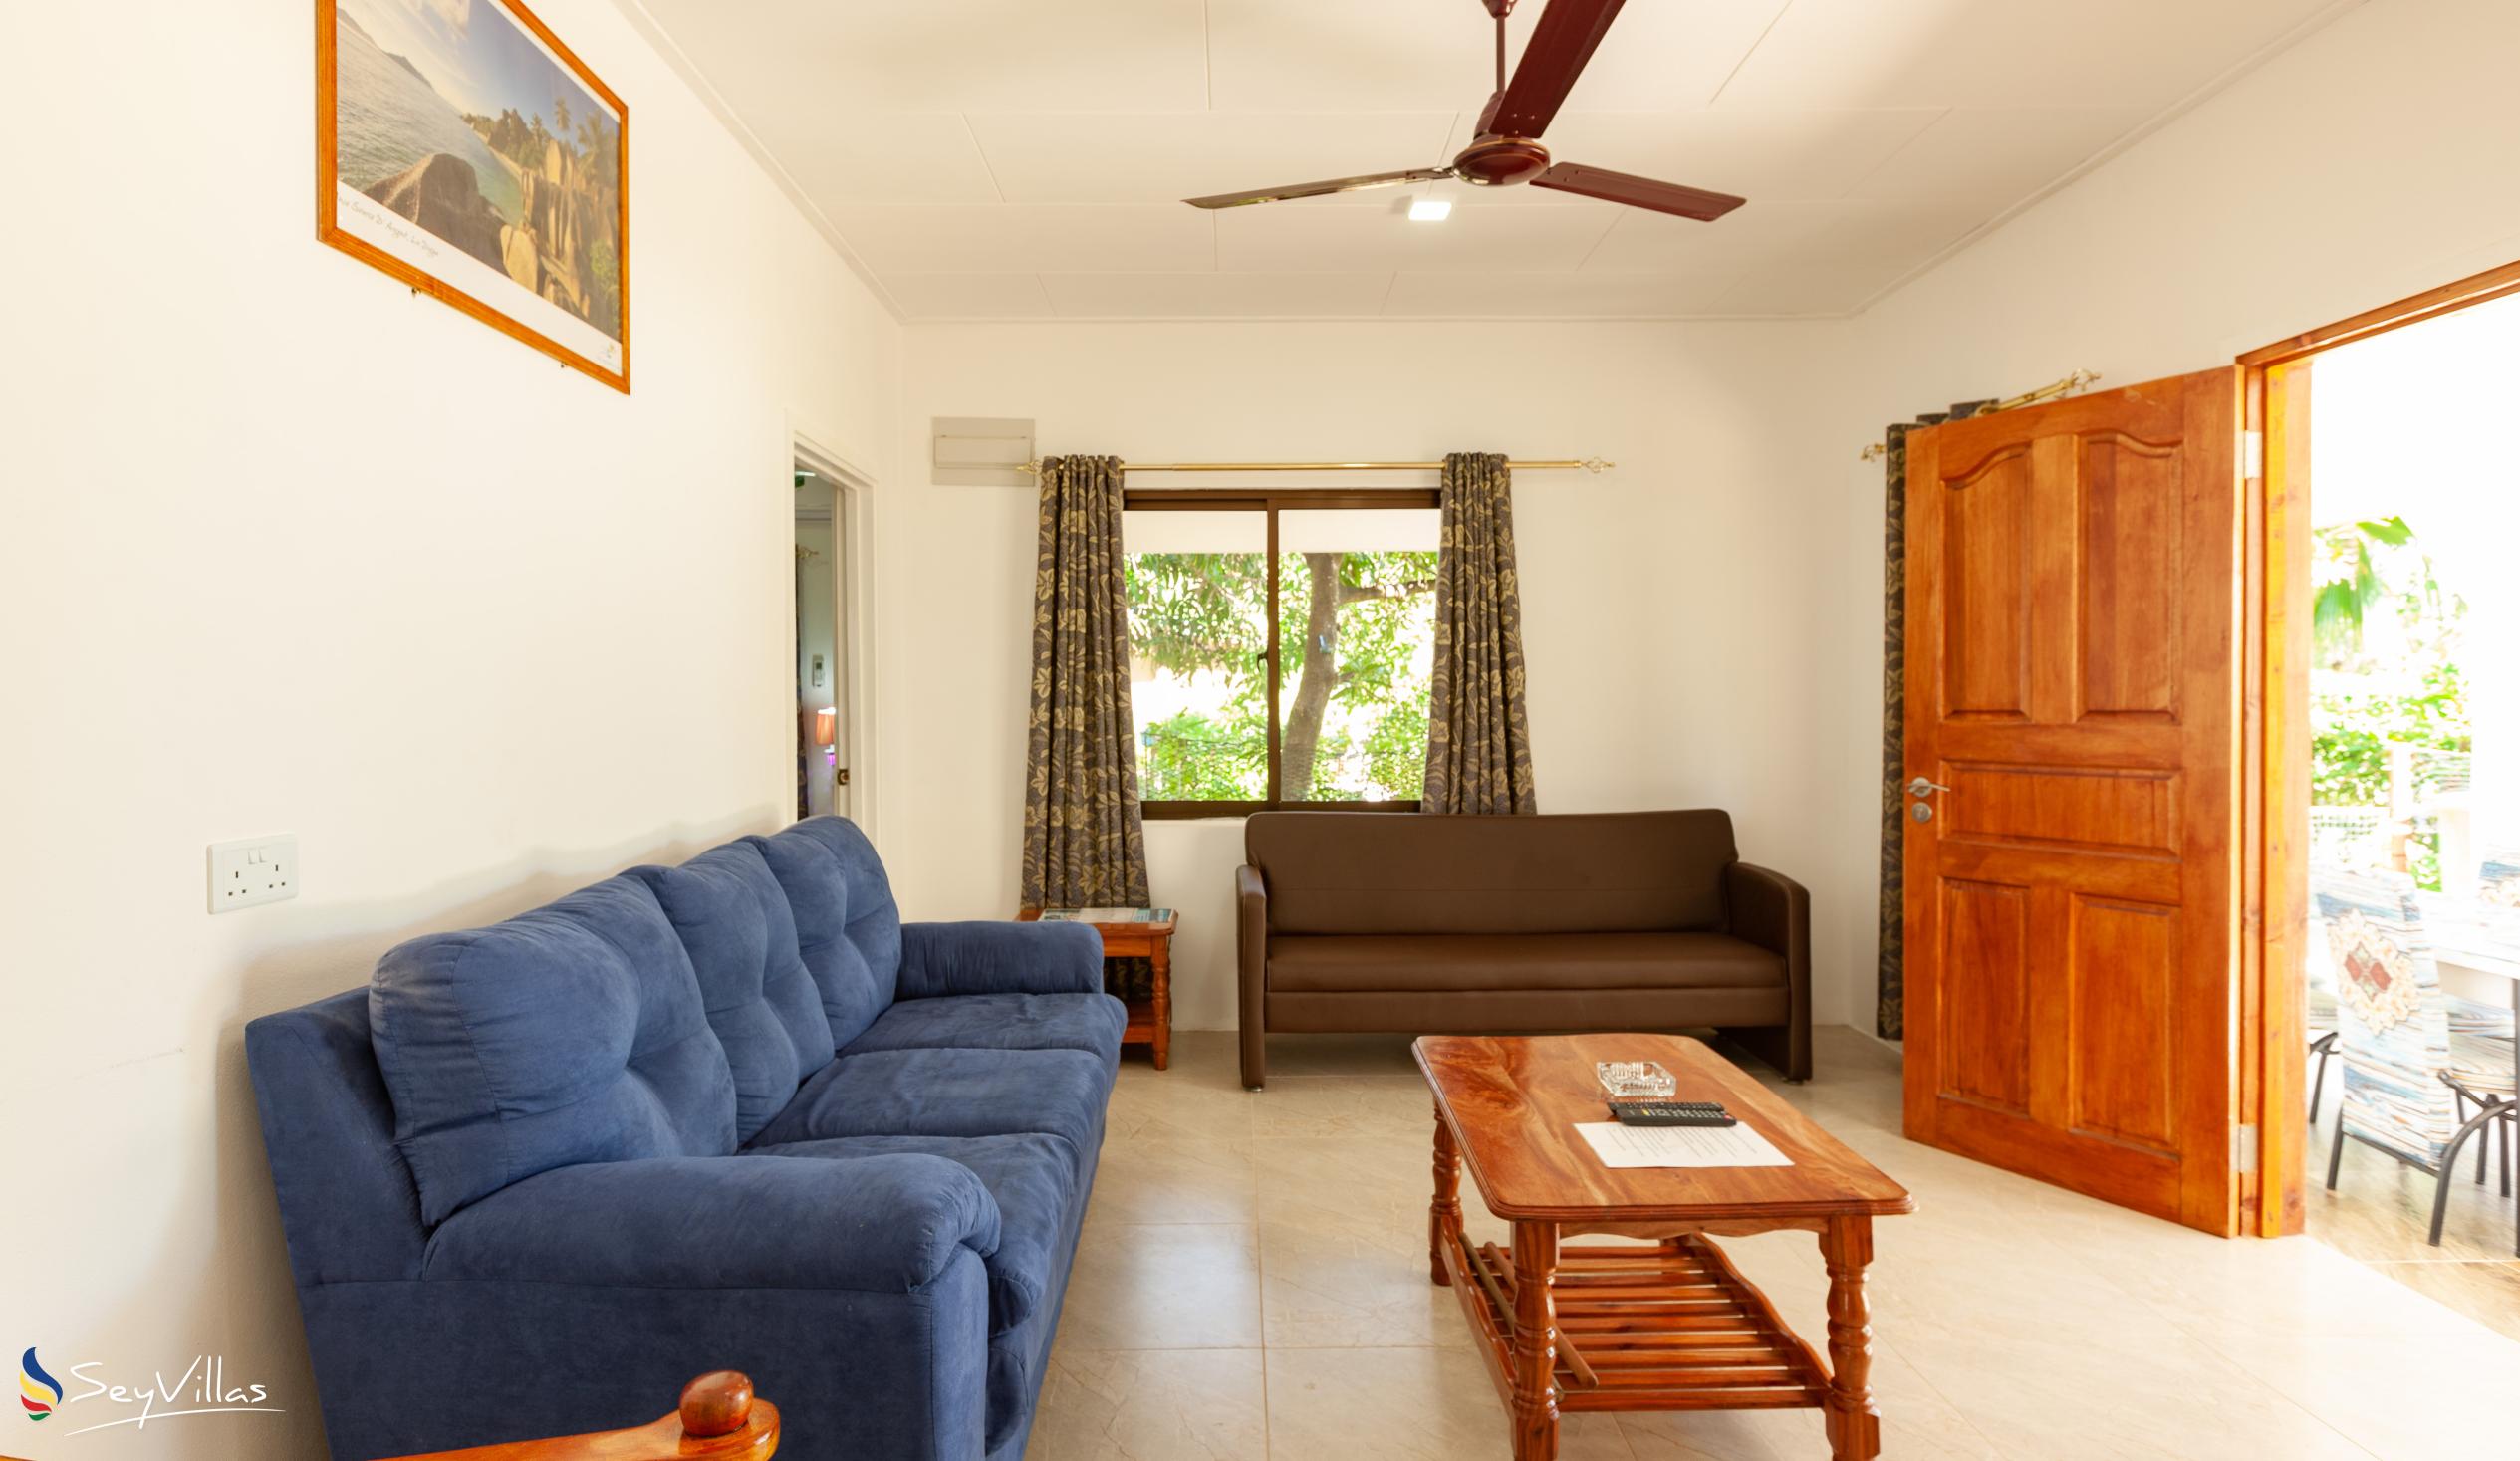 Foto 44: Anse Grosse Roche Beach Villa - Appartement Familiale 2 chambres - La Digue (Seychelles)